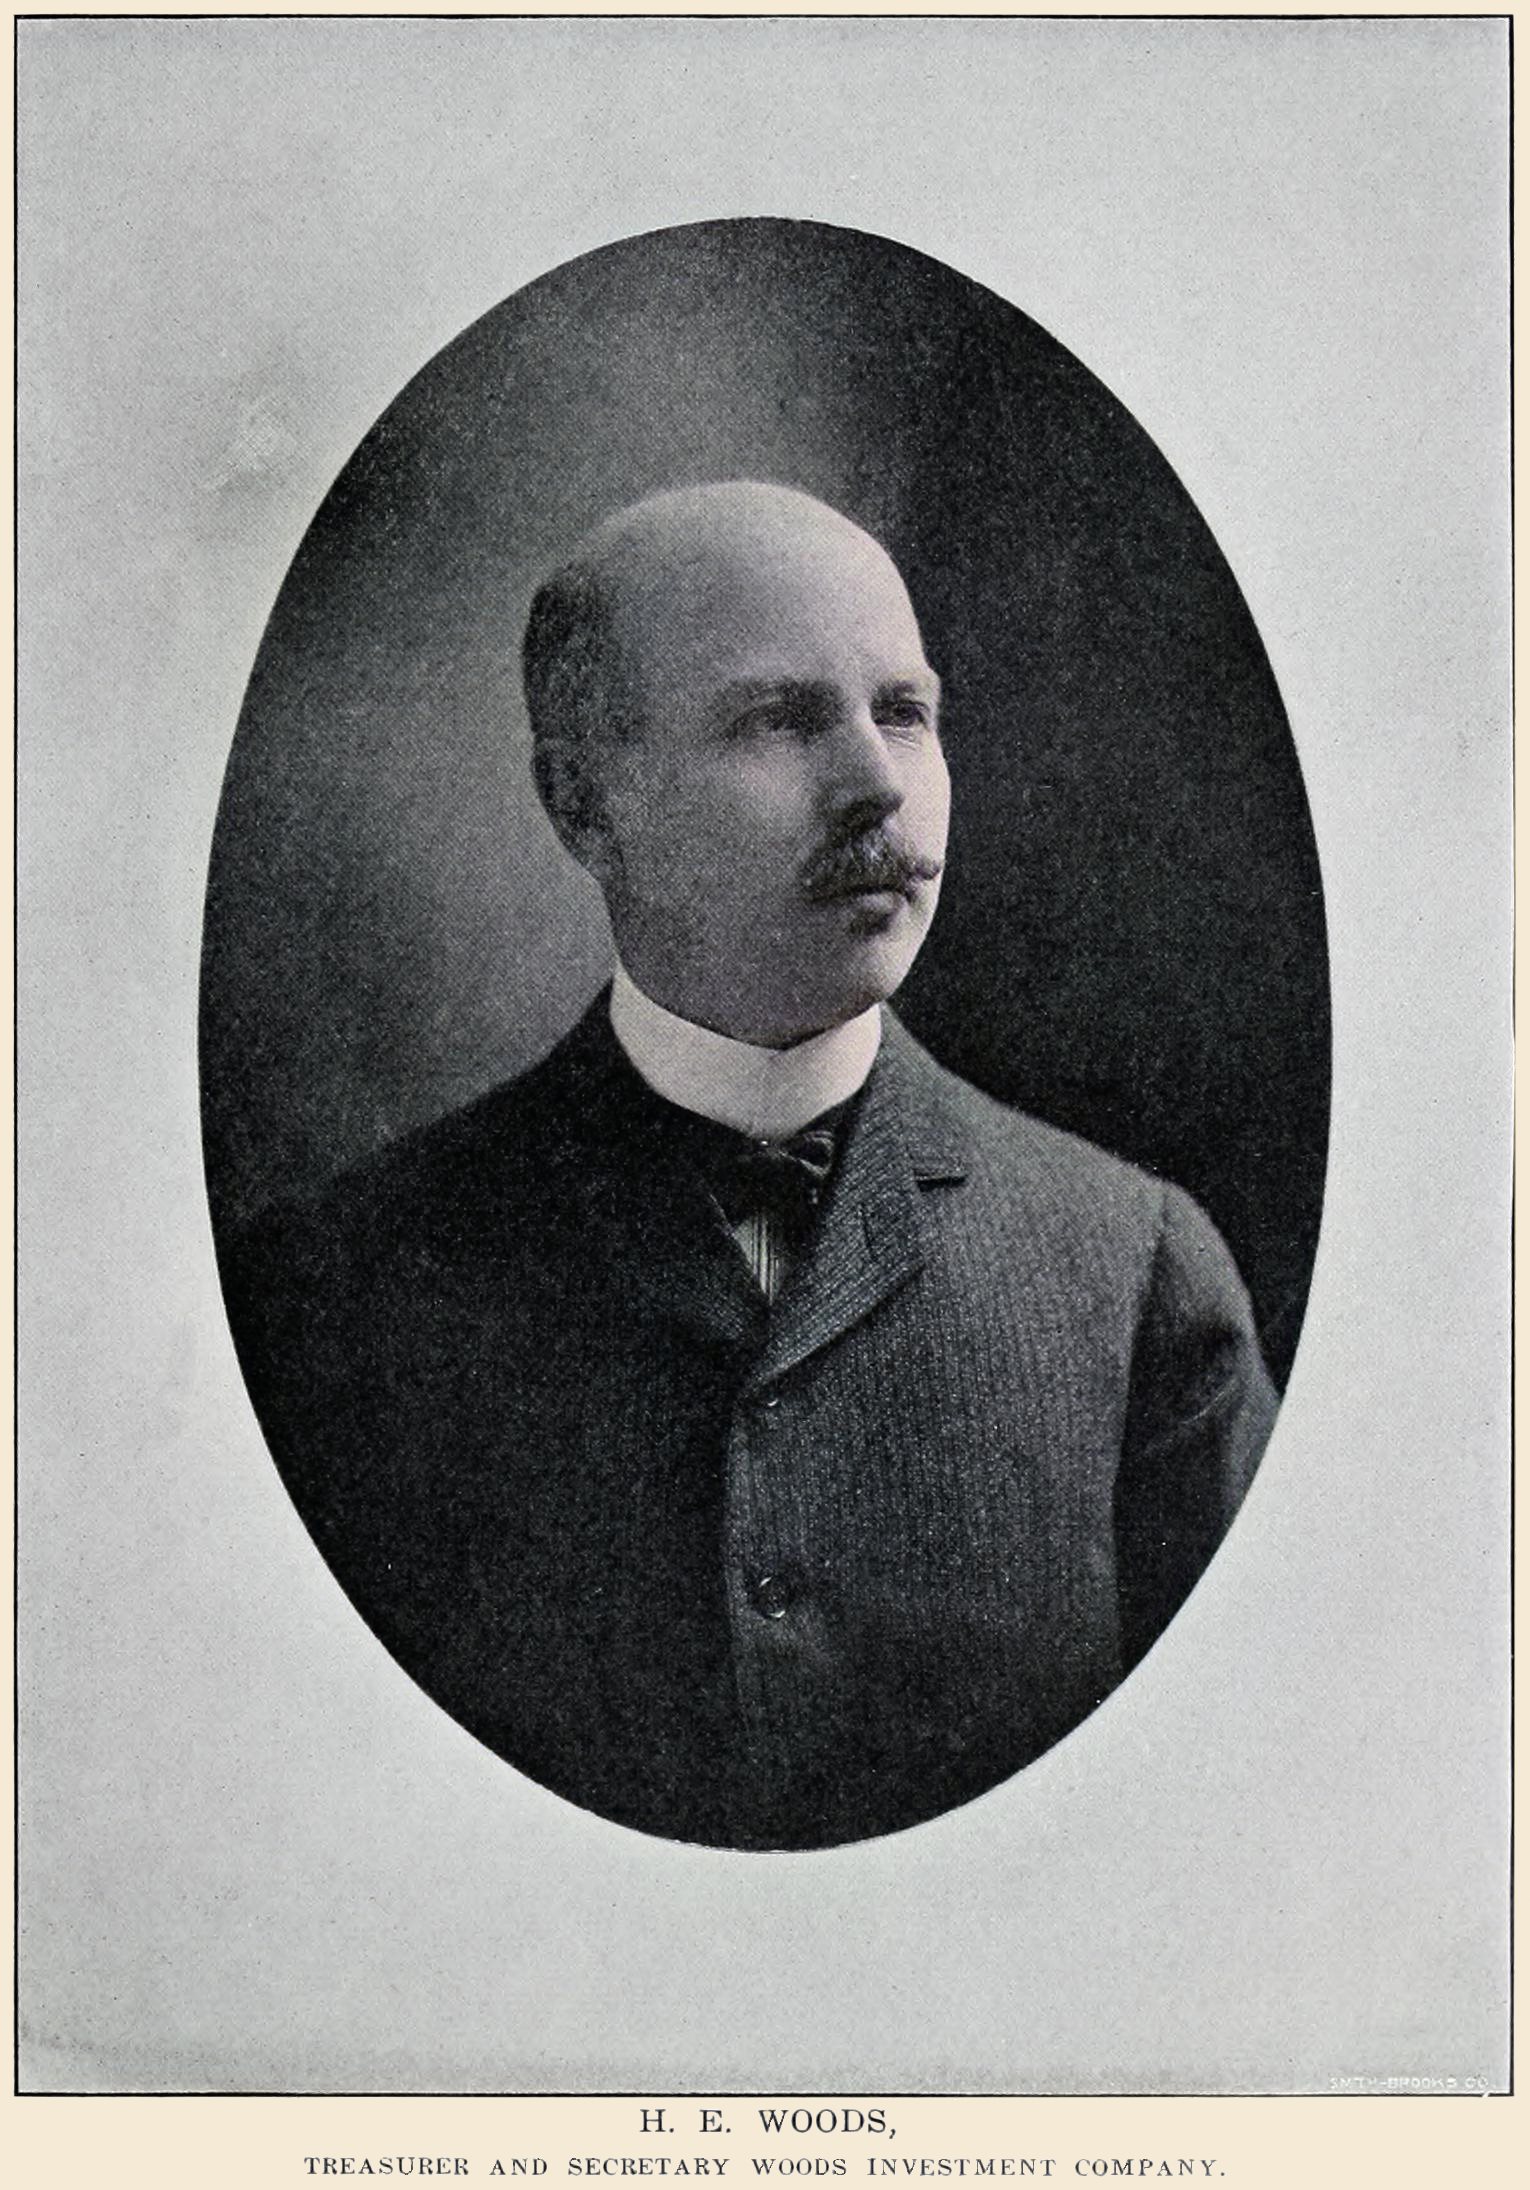 H. E. Woods, Treasurer and Secretary Woods Investment Company.